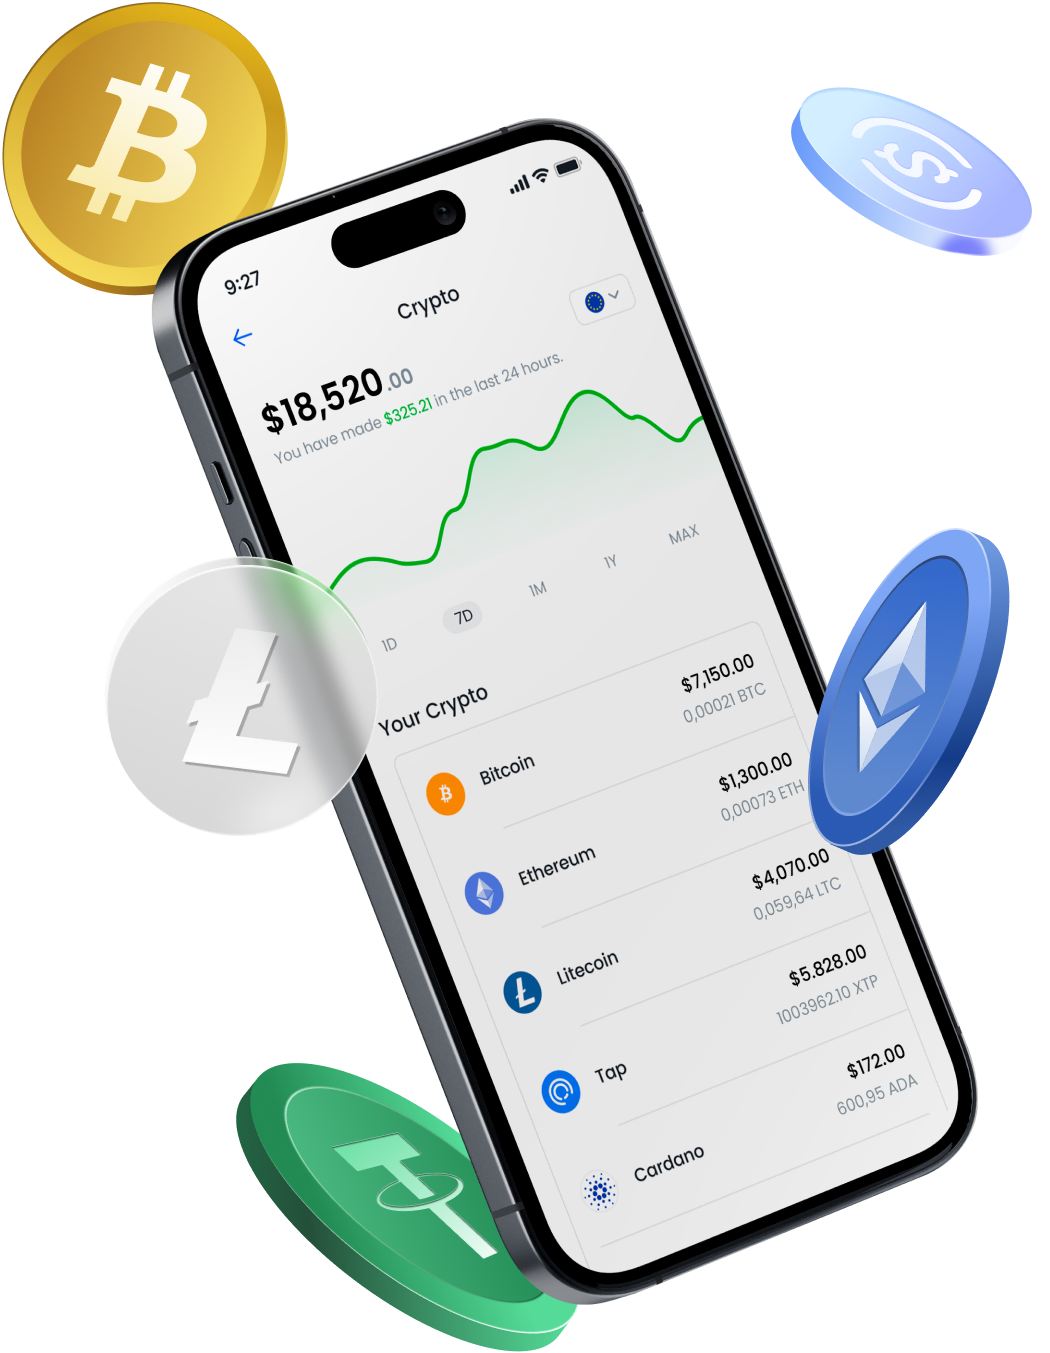 The super-powered money app